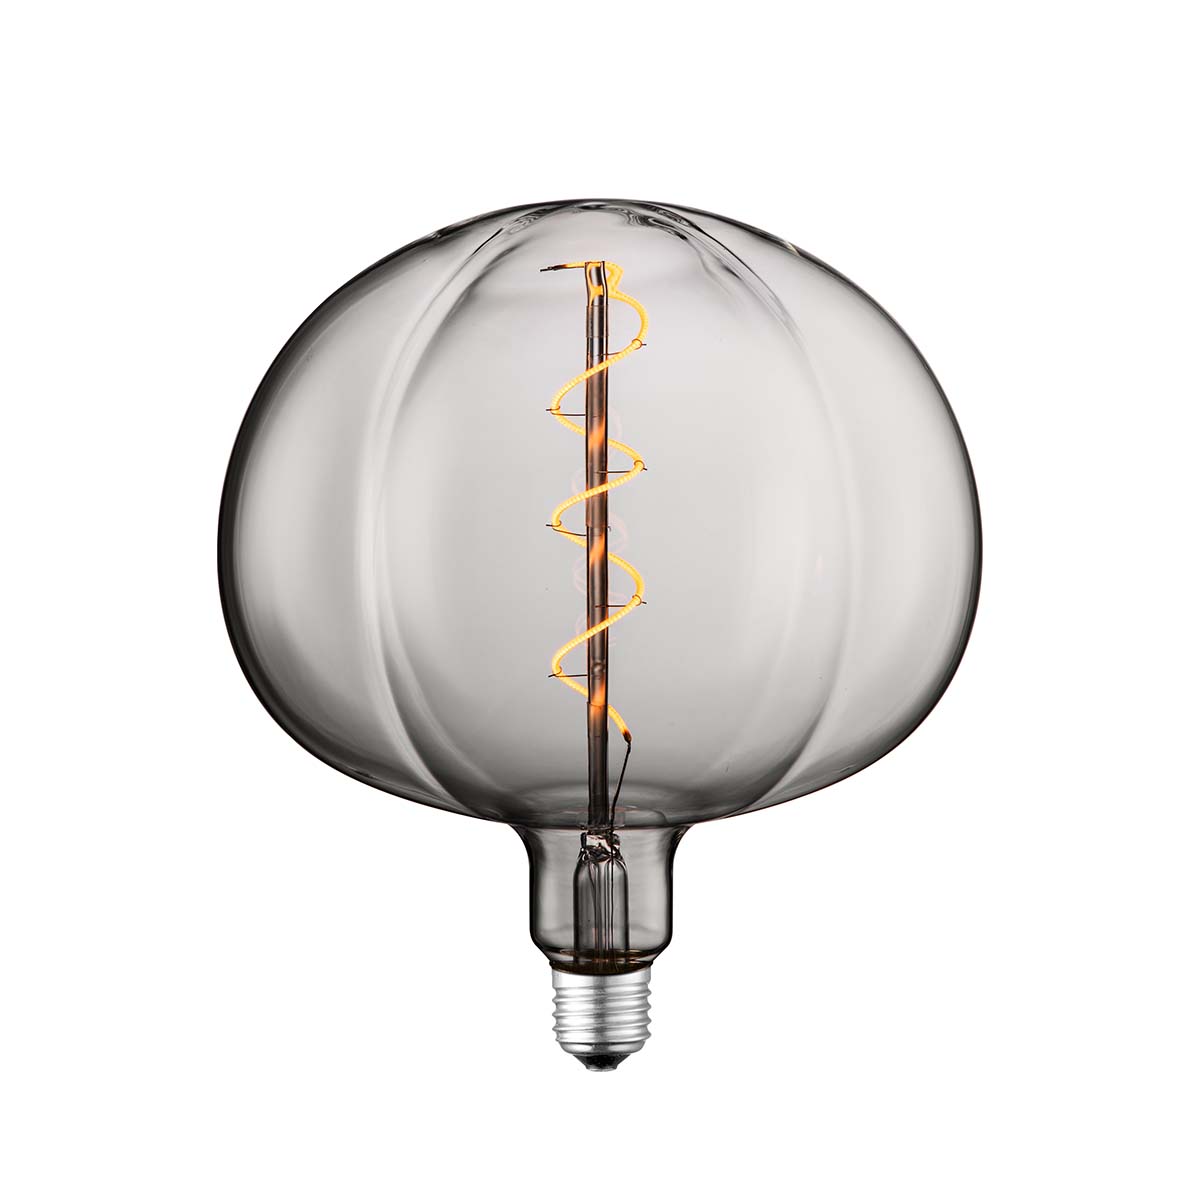 Tangla lighting - TLB-8106-04SM - LED Light Bulb Single Spiral filament - special 4W smoke - buds - dimmable - E27